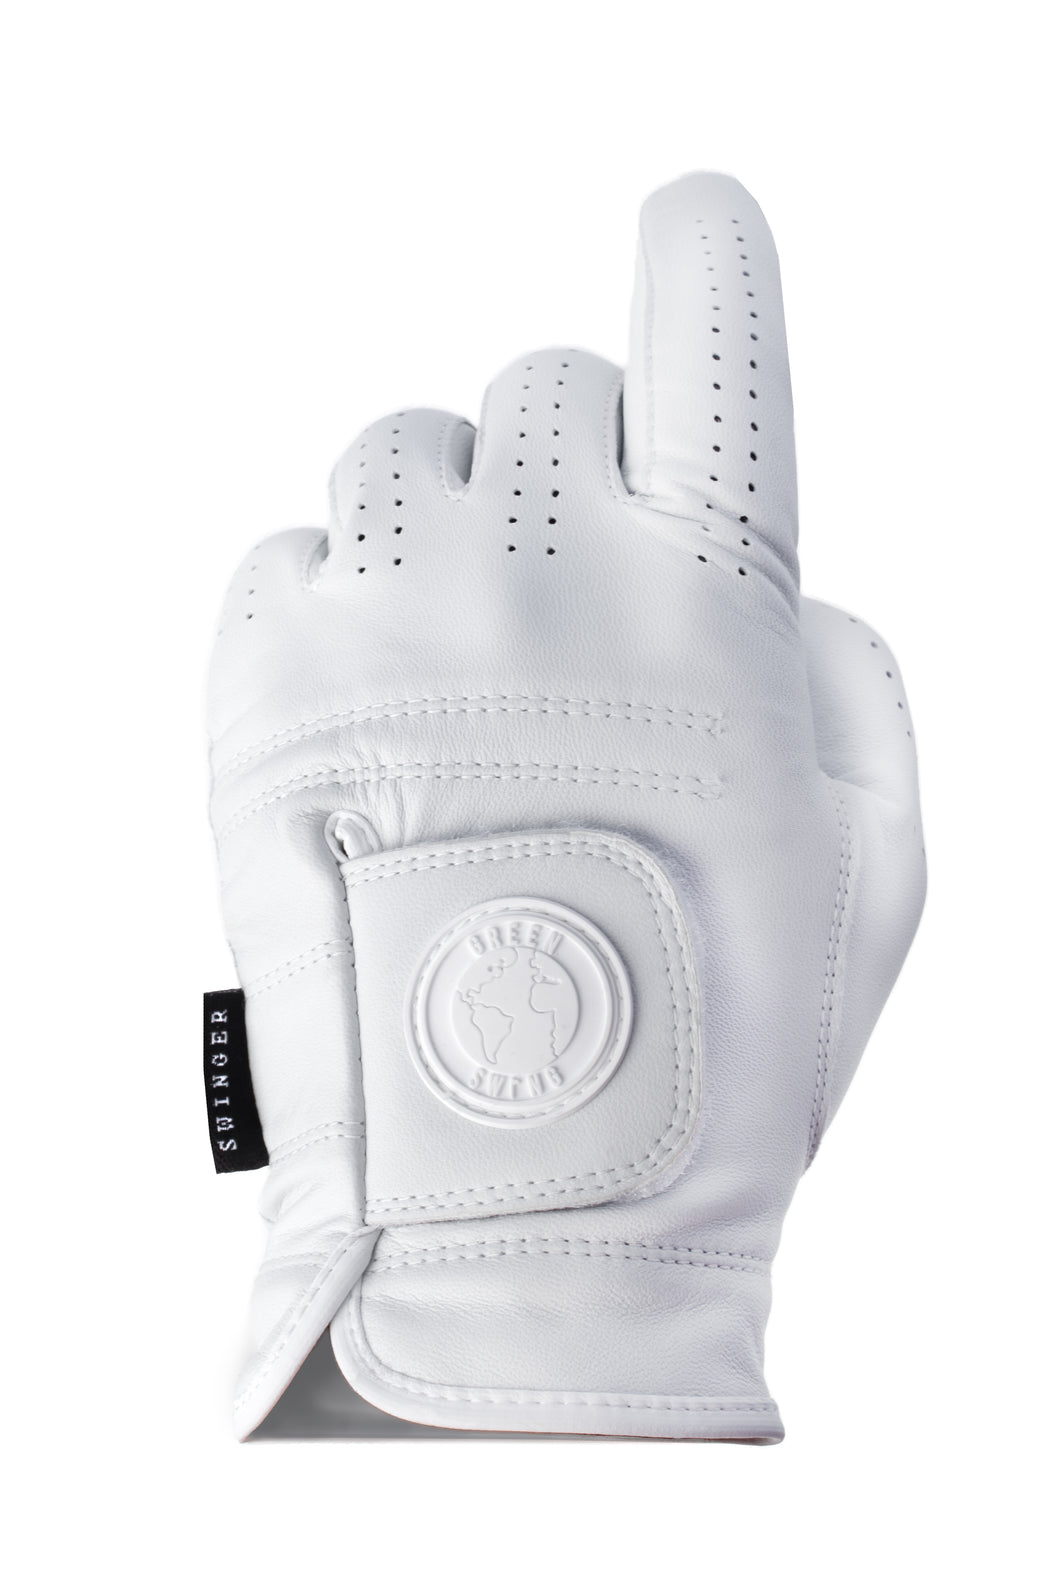 White Cabretta Leather Golf Gove | High Quality Golf Glove | Women's